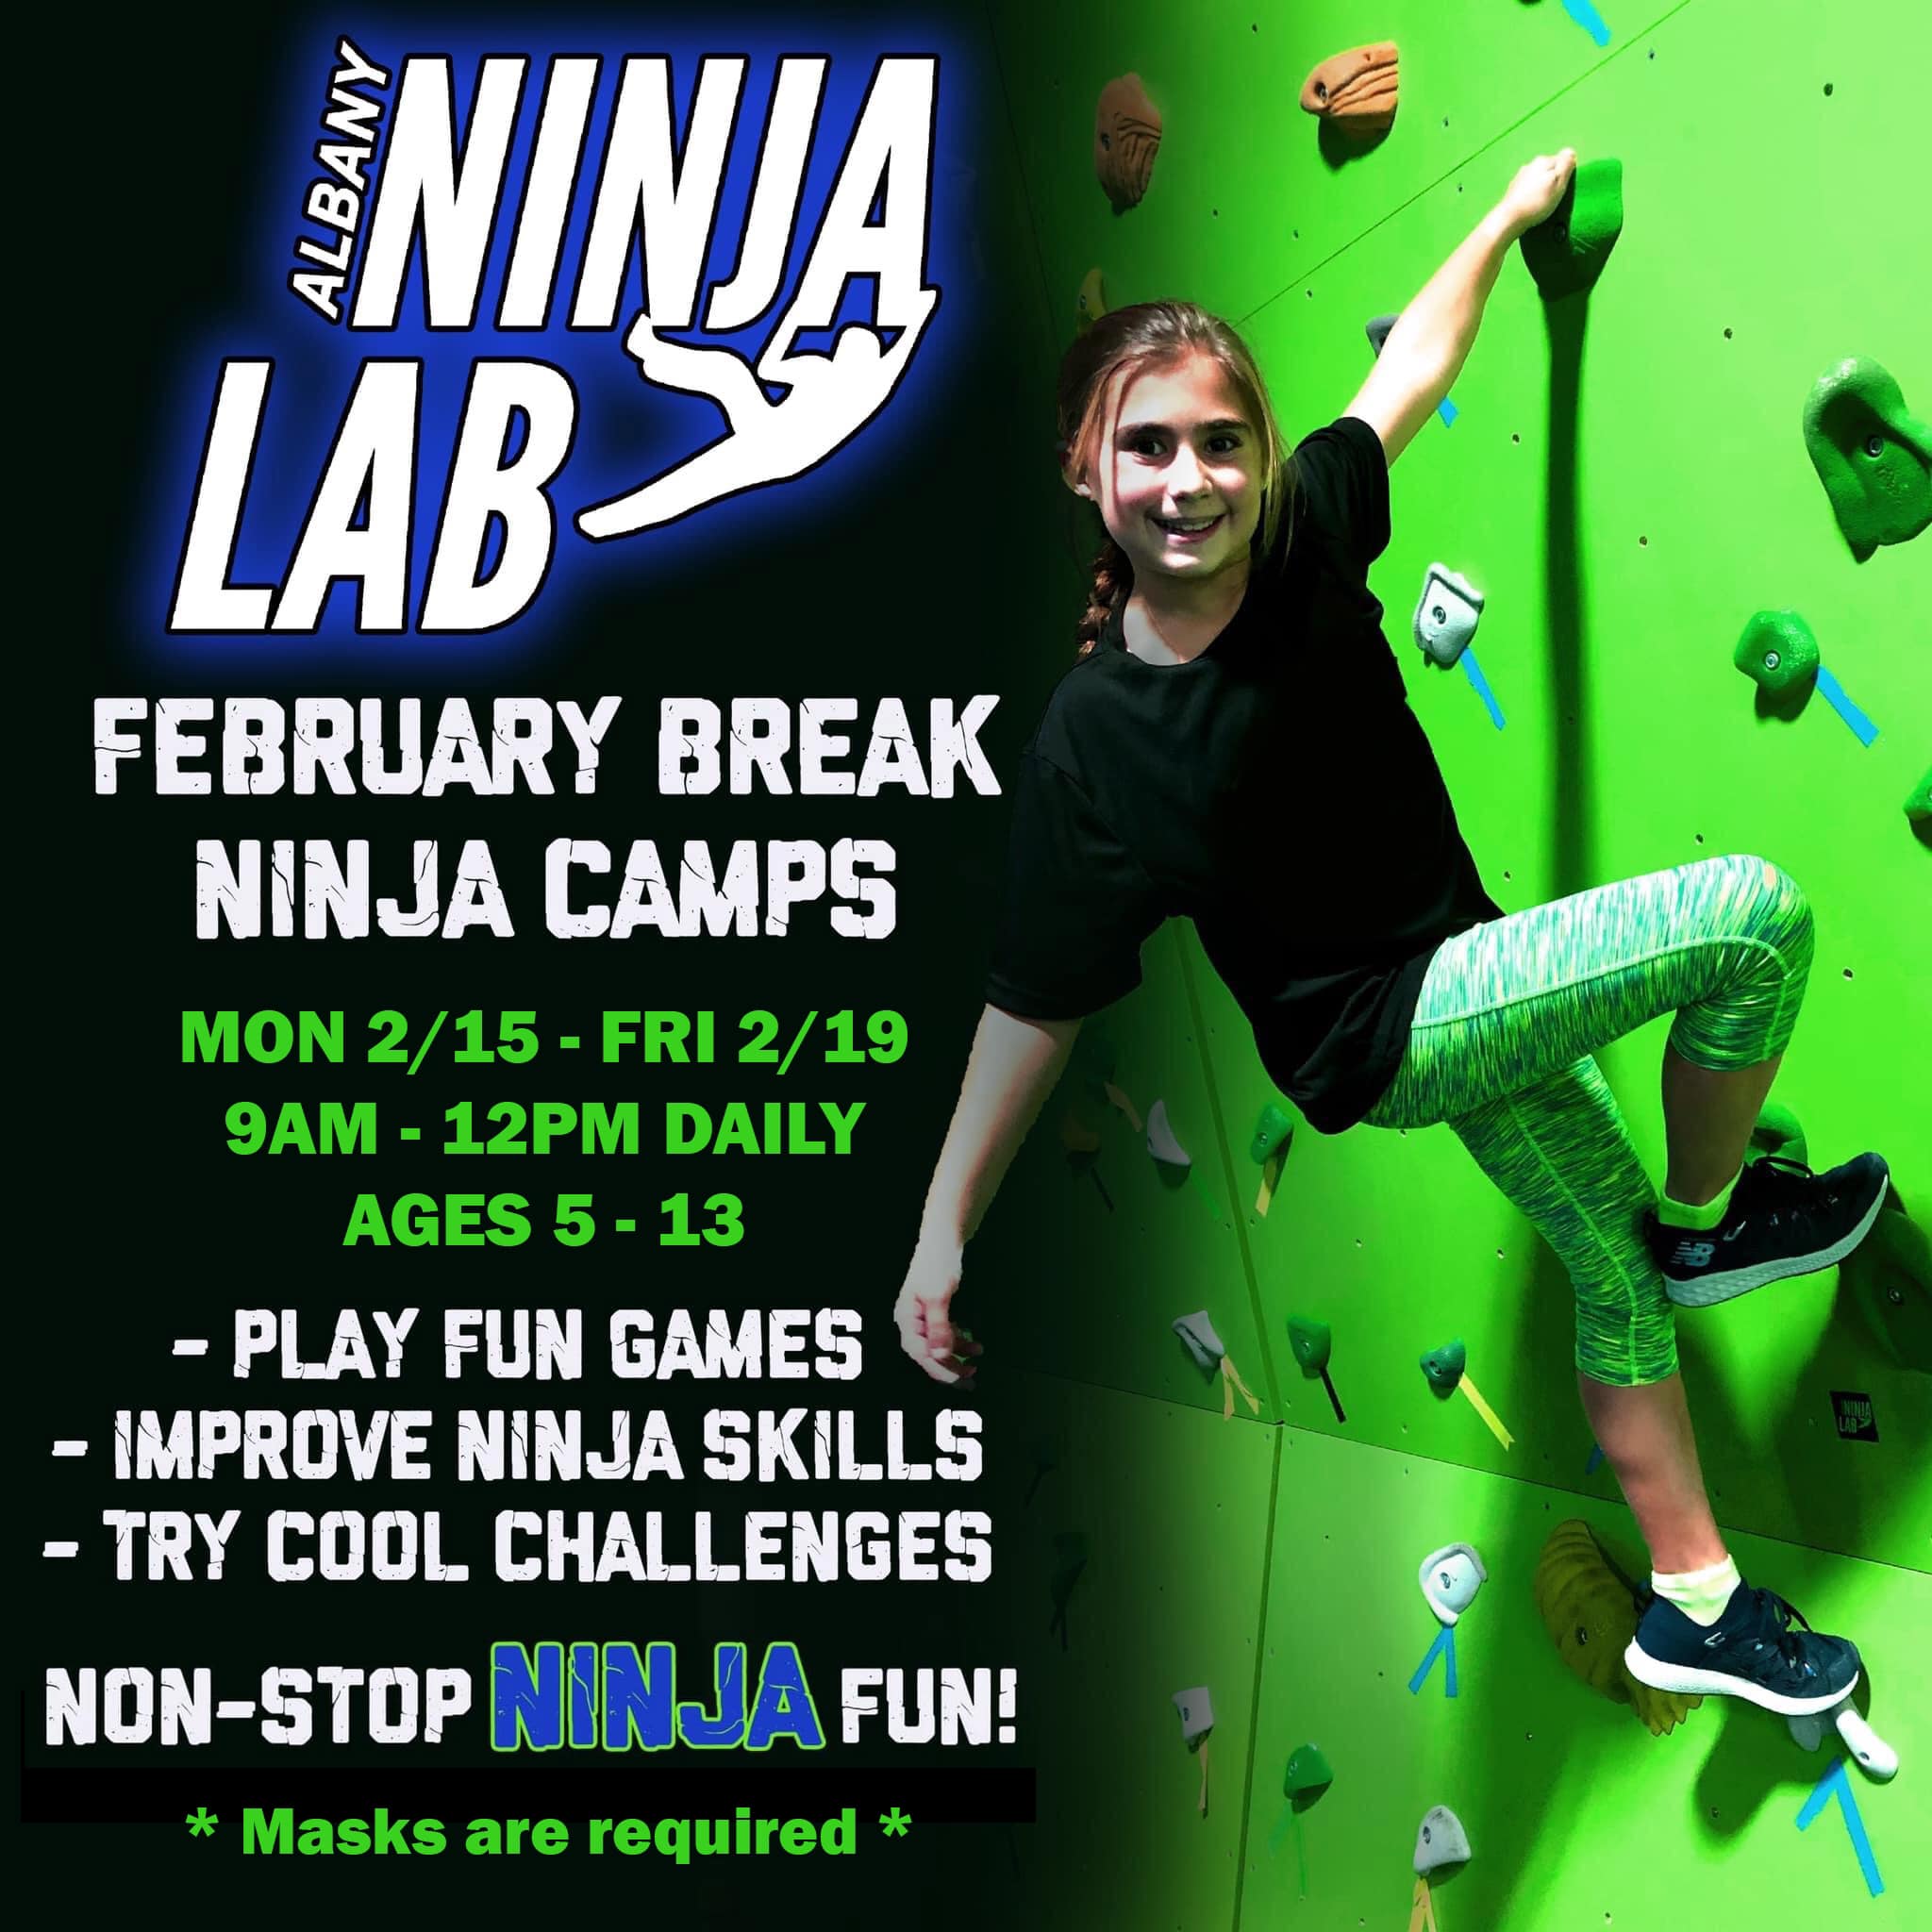 Albany Ninja Lab February Break